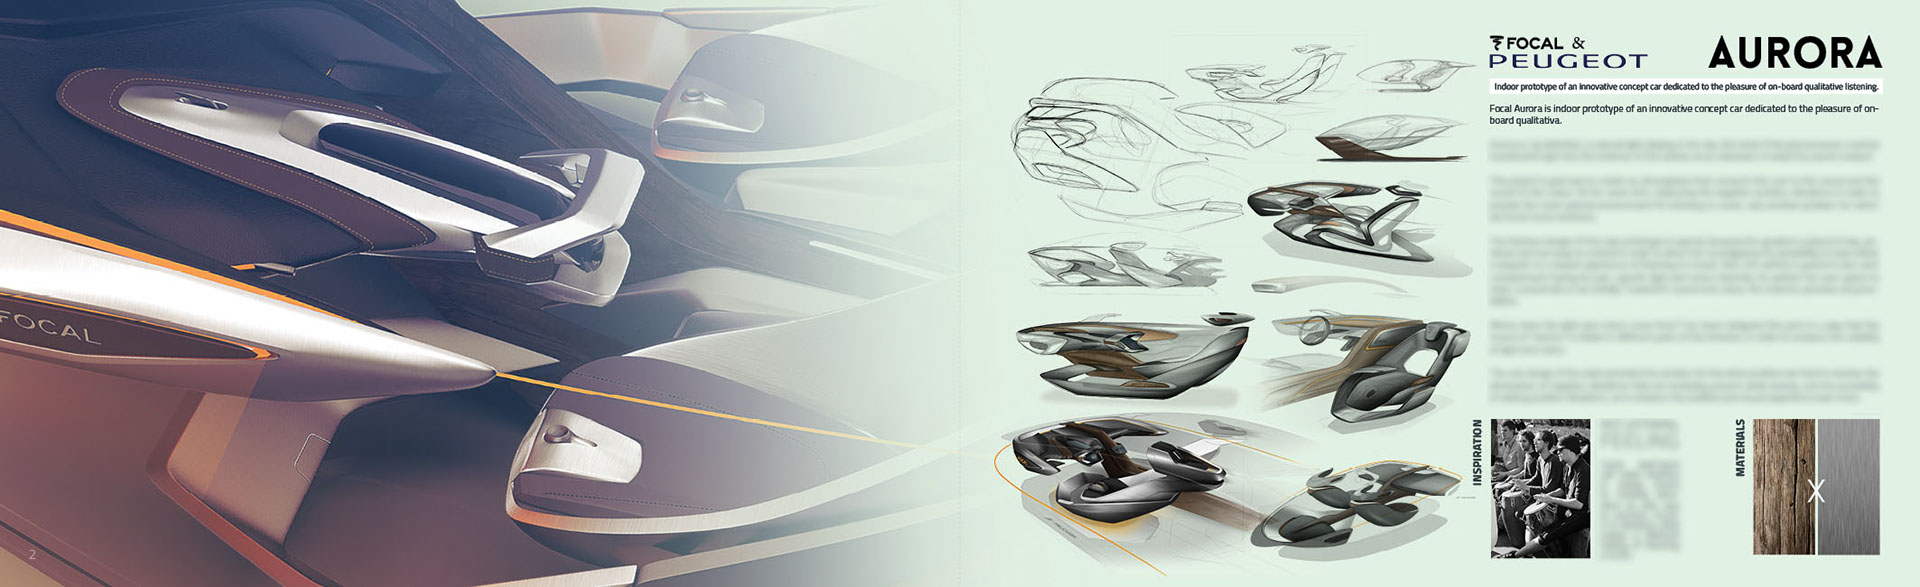 Peugeot Focal - Aurora Concept - Interior design by MMelicharek